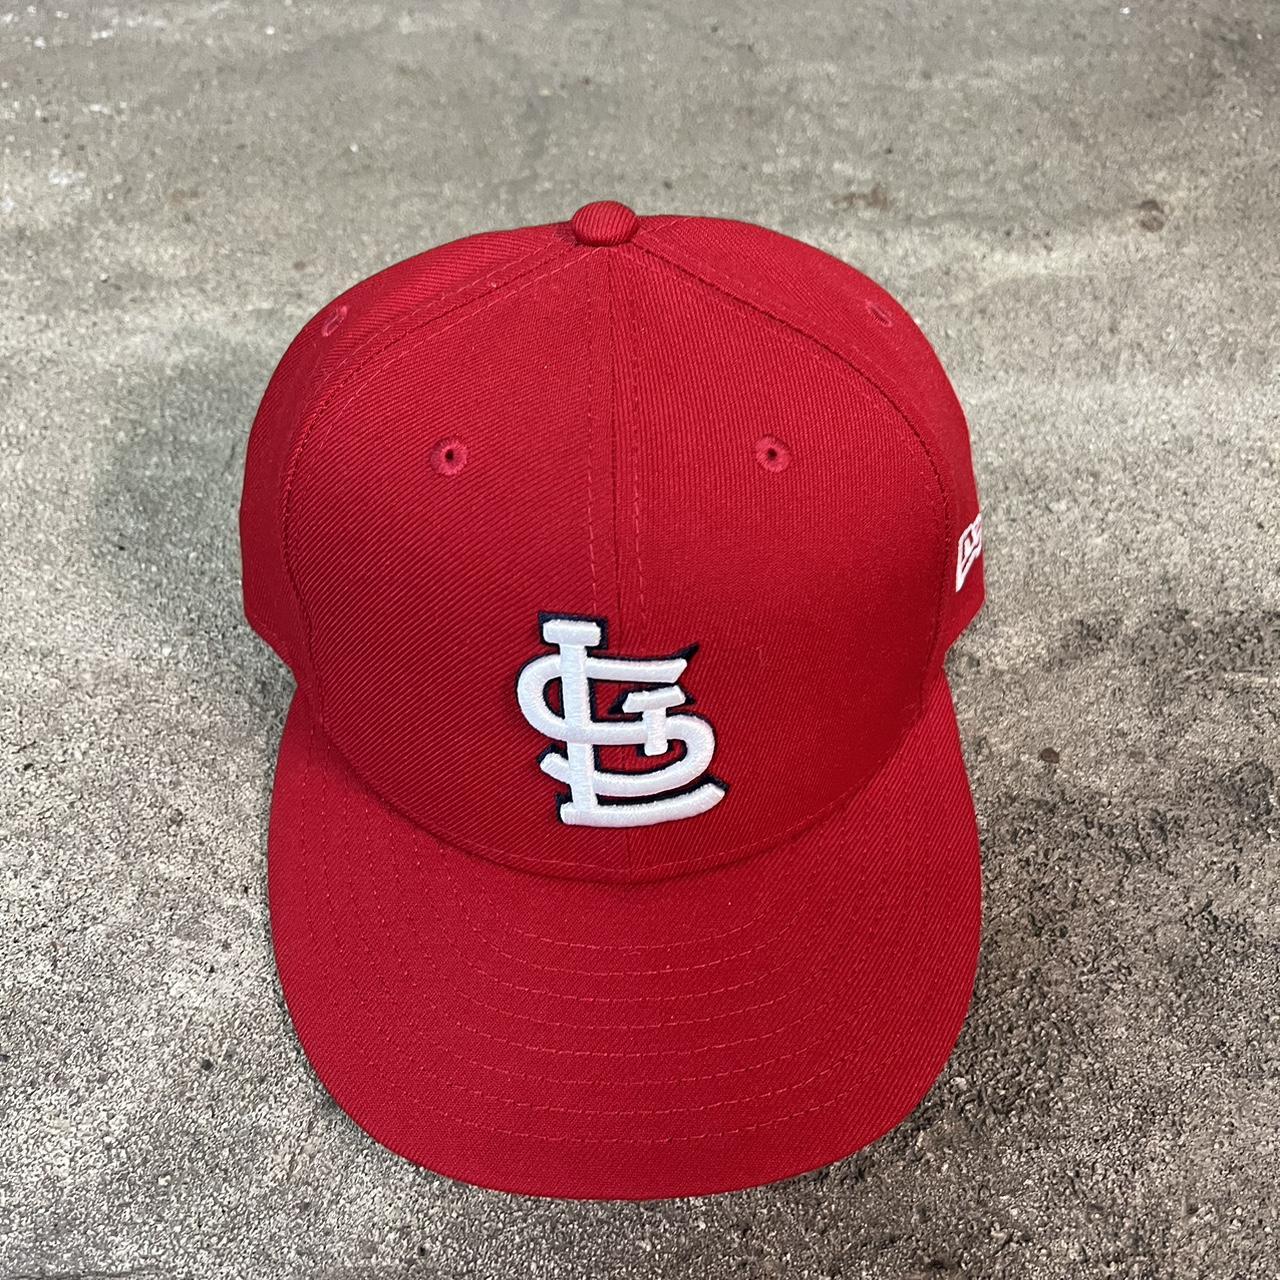 7 1/4 new era mlb St. Louis cardinals fitted hat - Depop